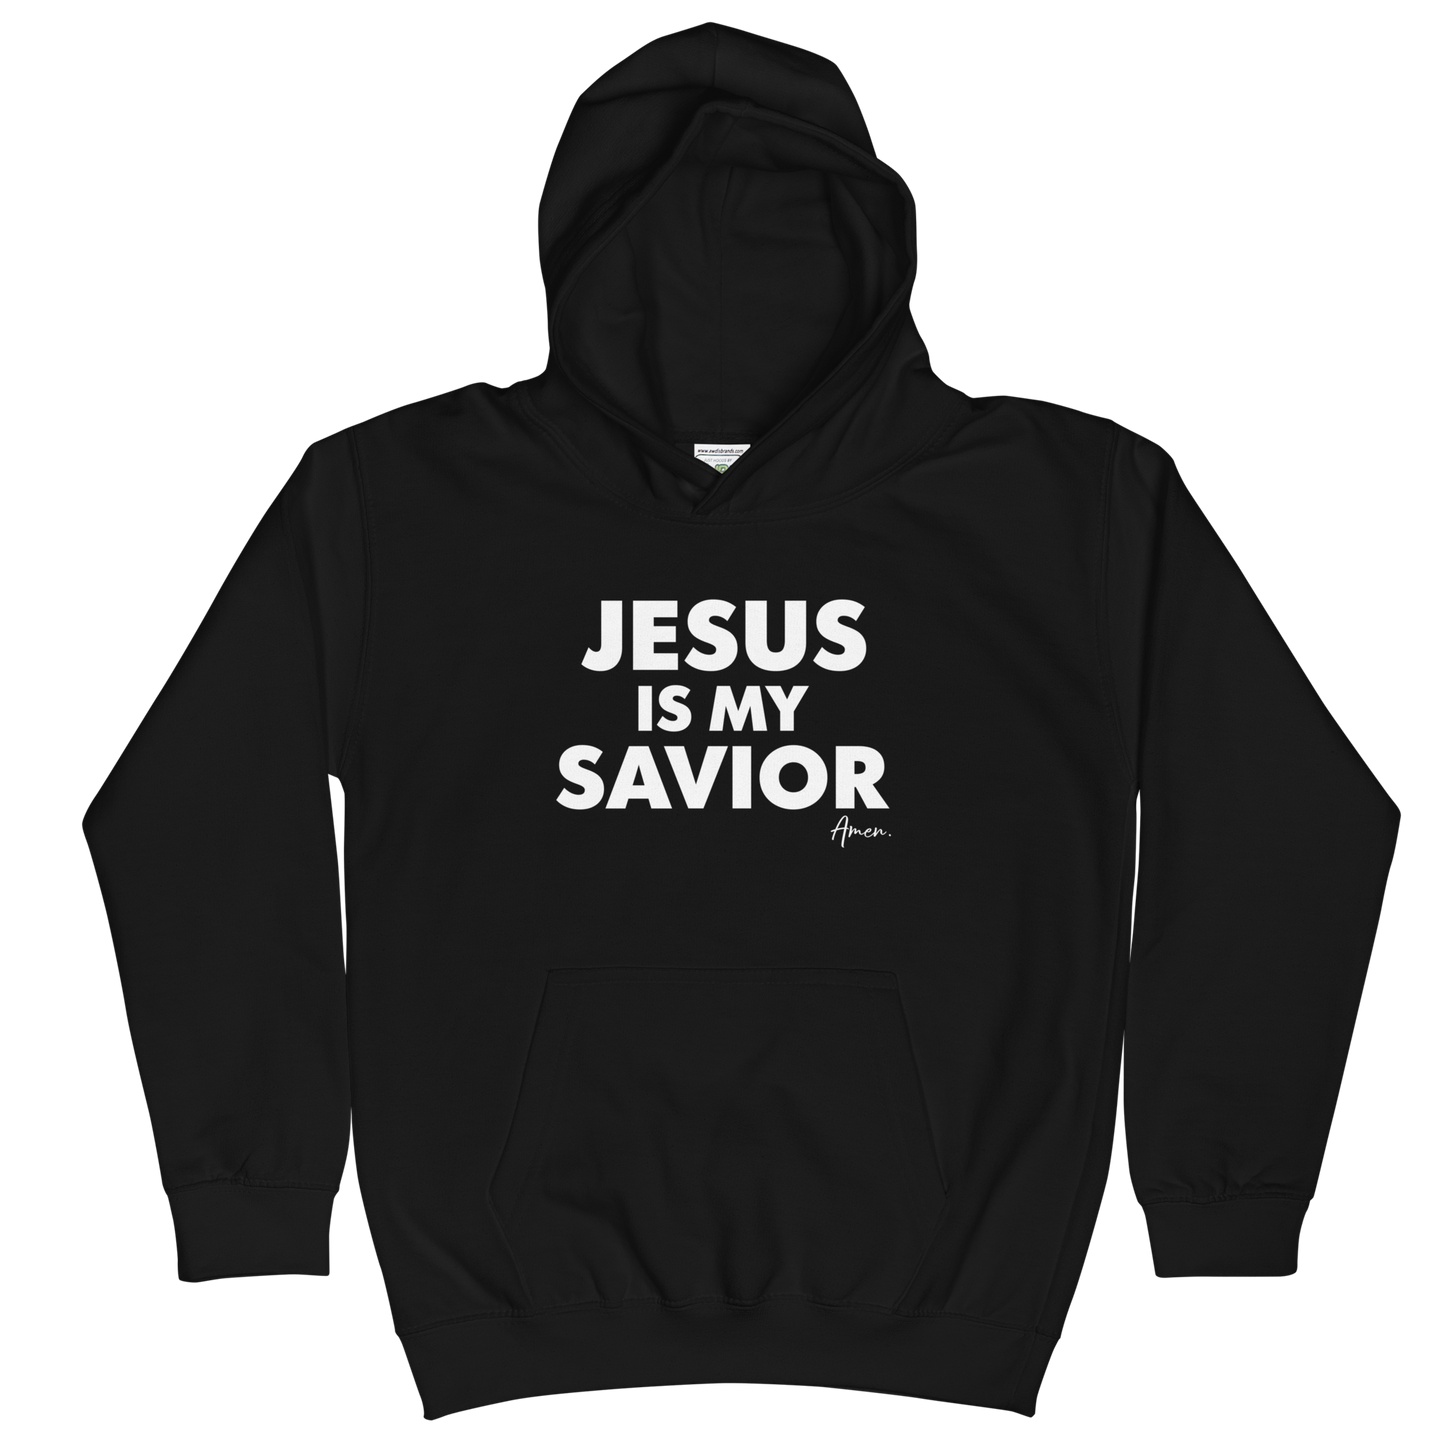 Jesus is my Savior - Kids Hoodie